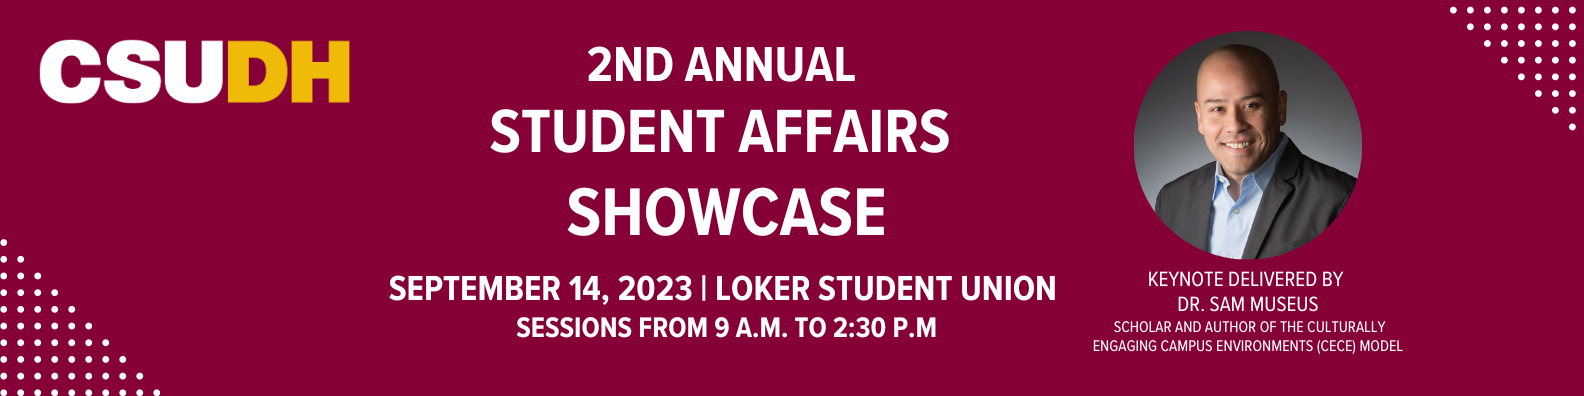 2023 student affairs showcase featuring Dr. Sam Museus 